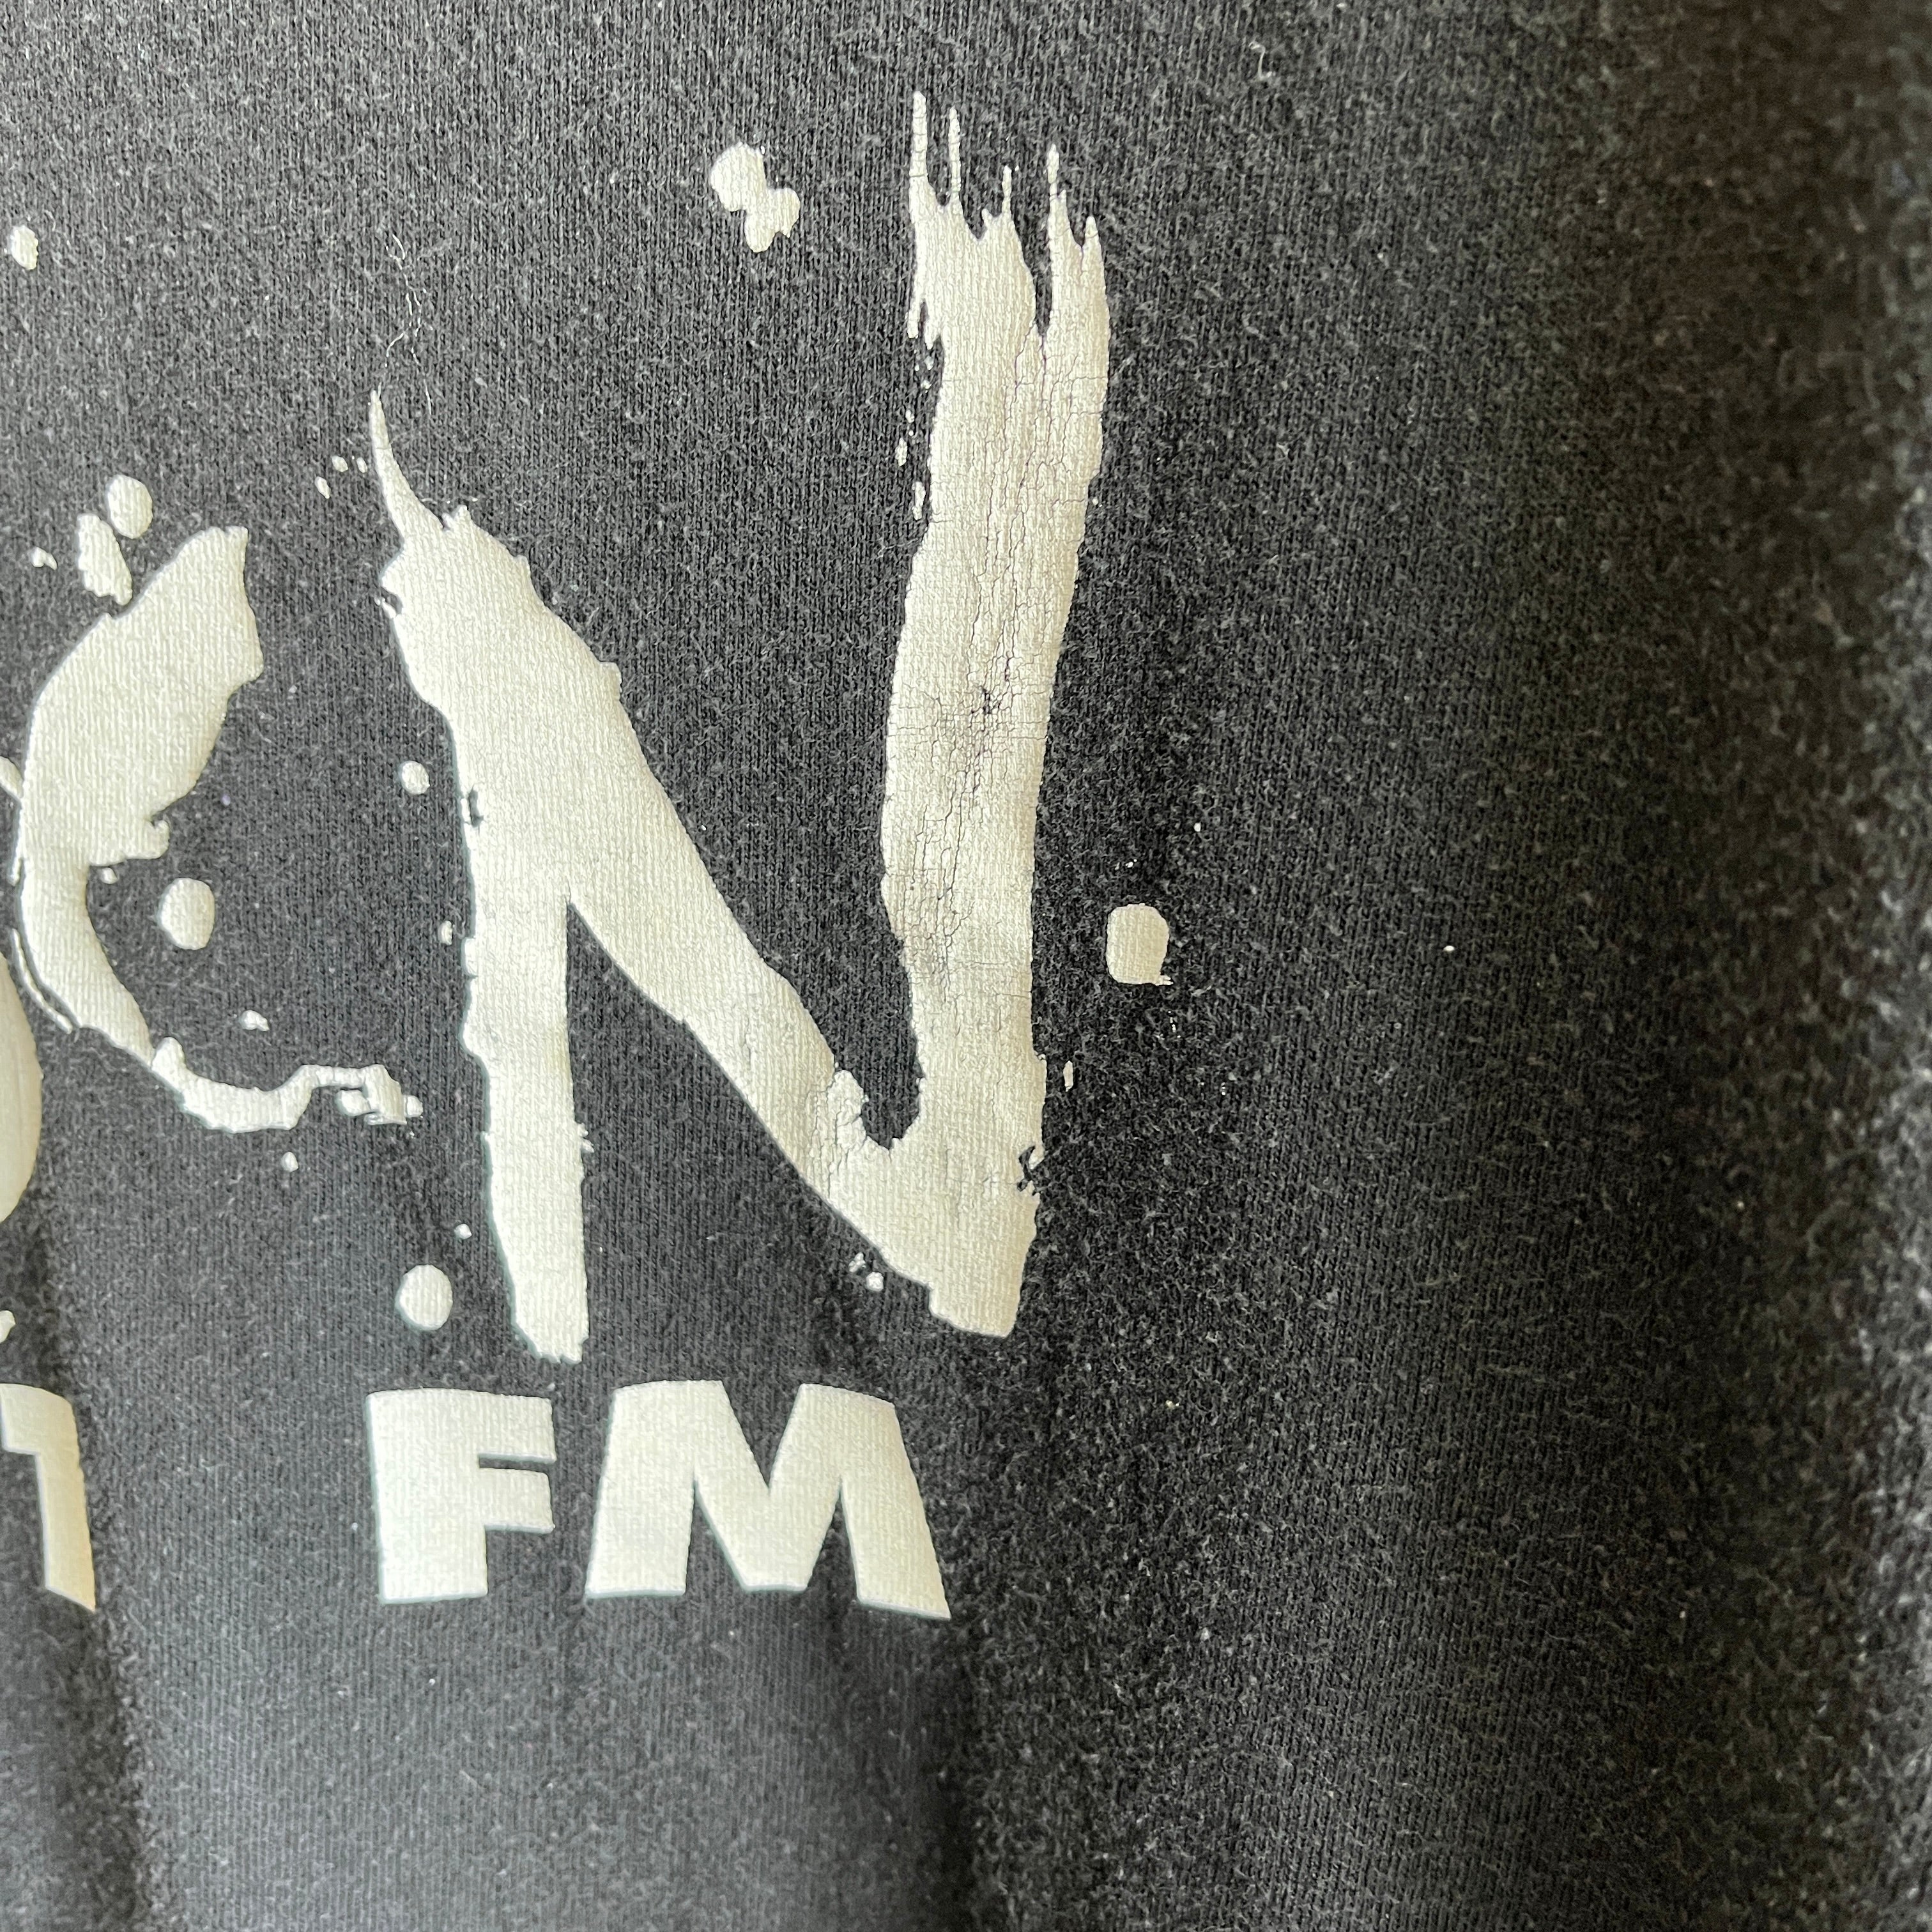 WBCN Retro T-Shirt - Classic Boston Radio Station